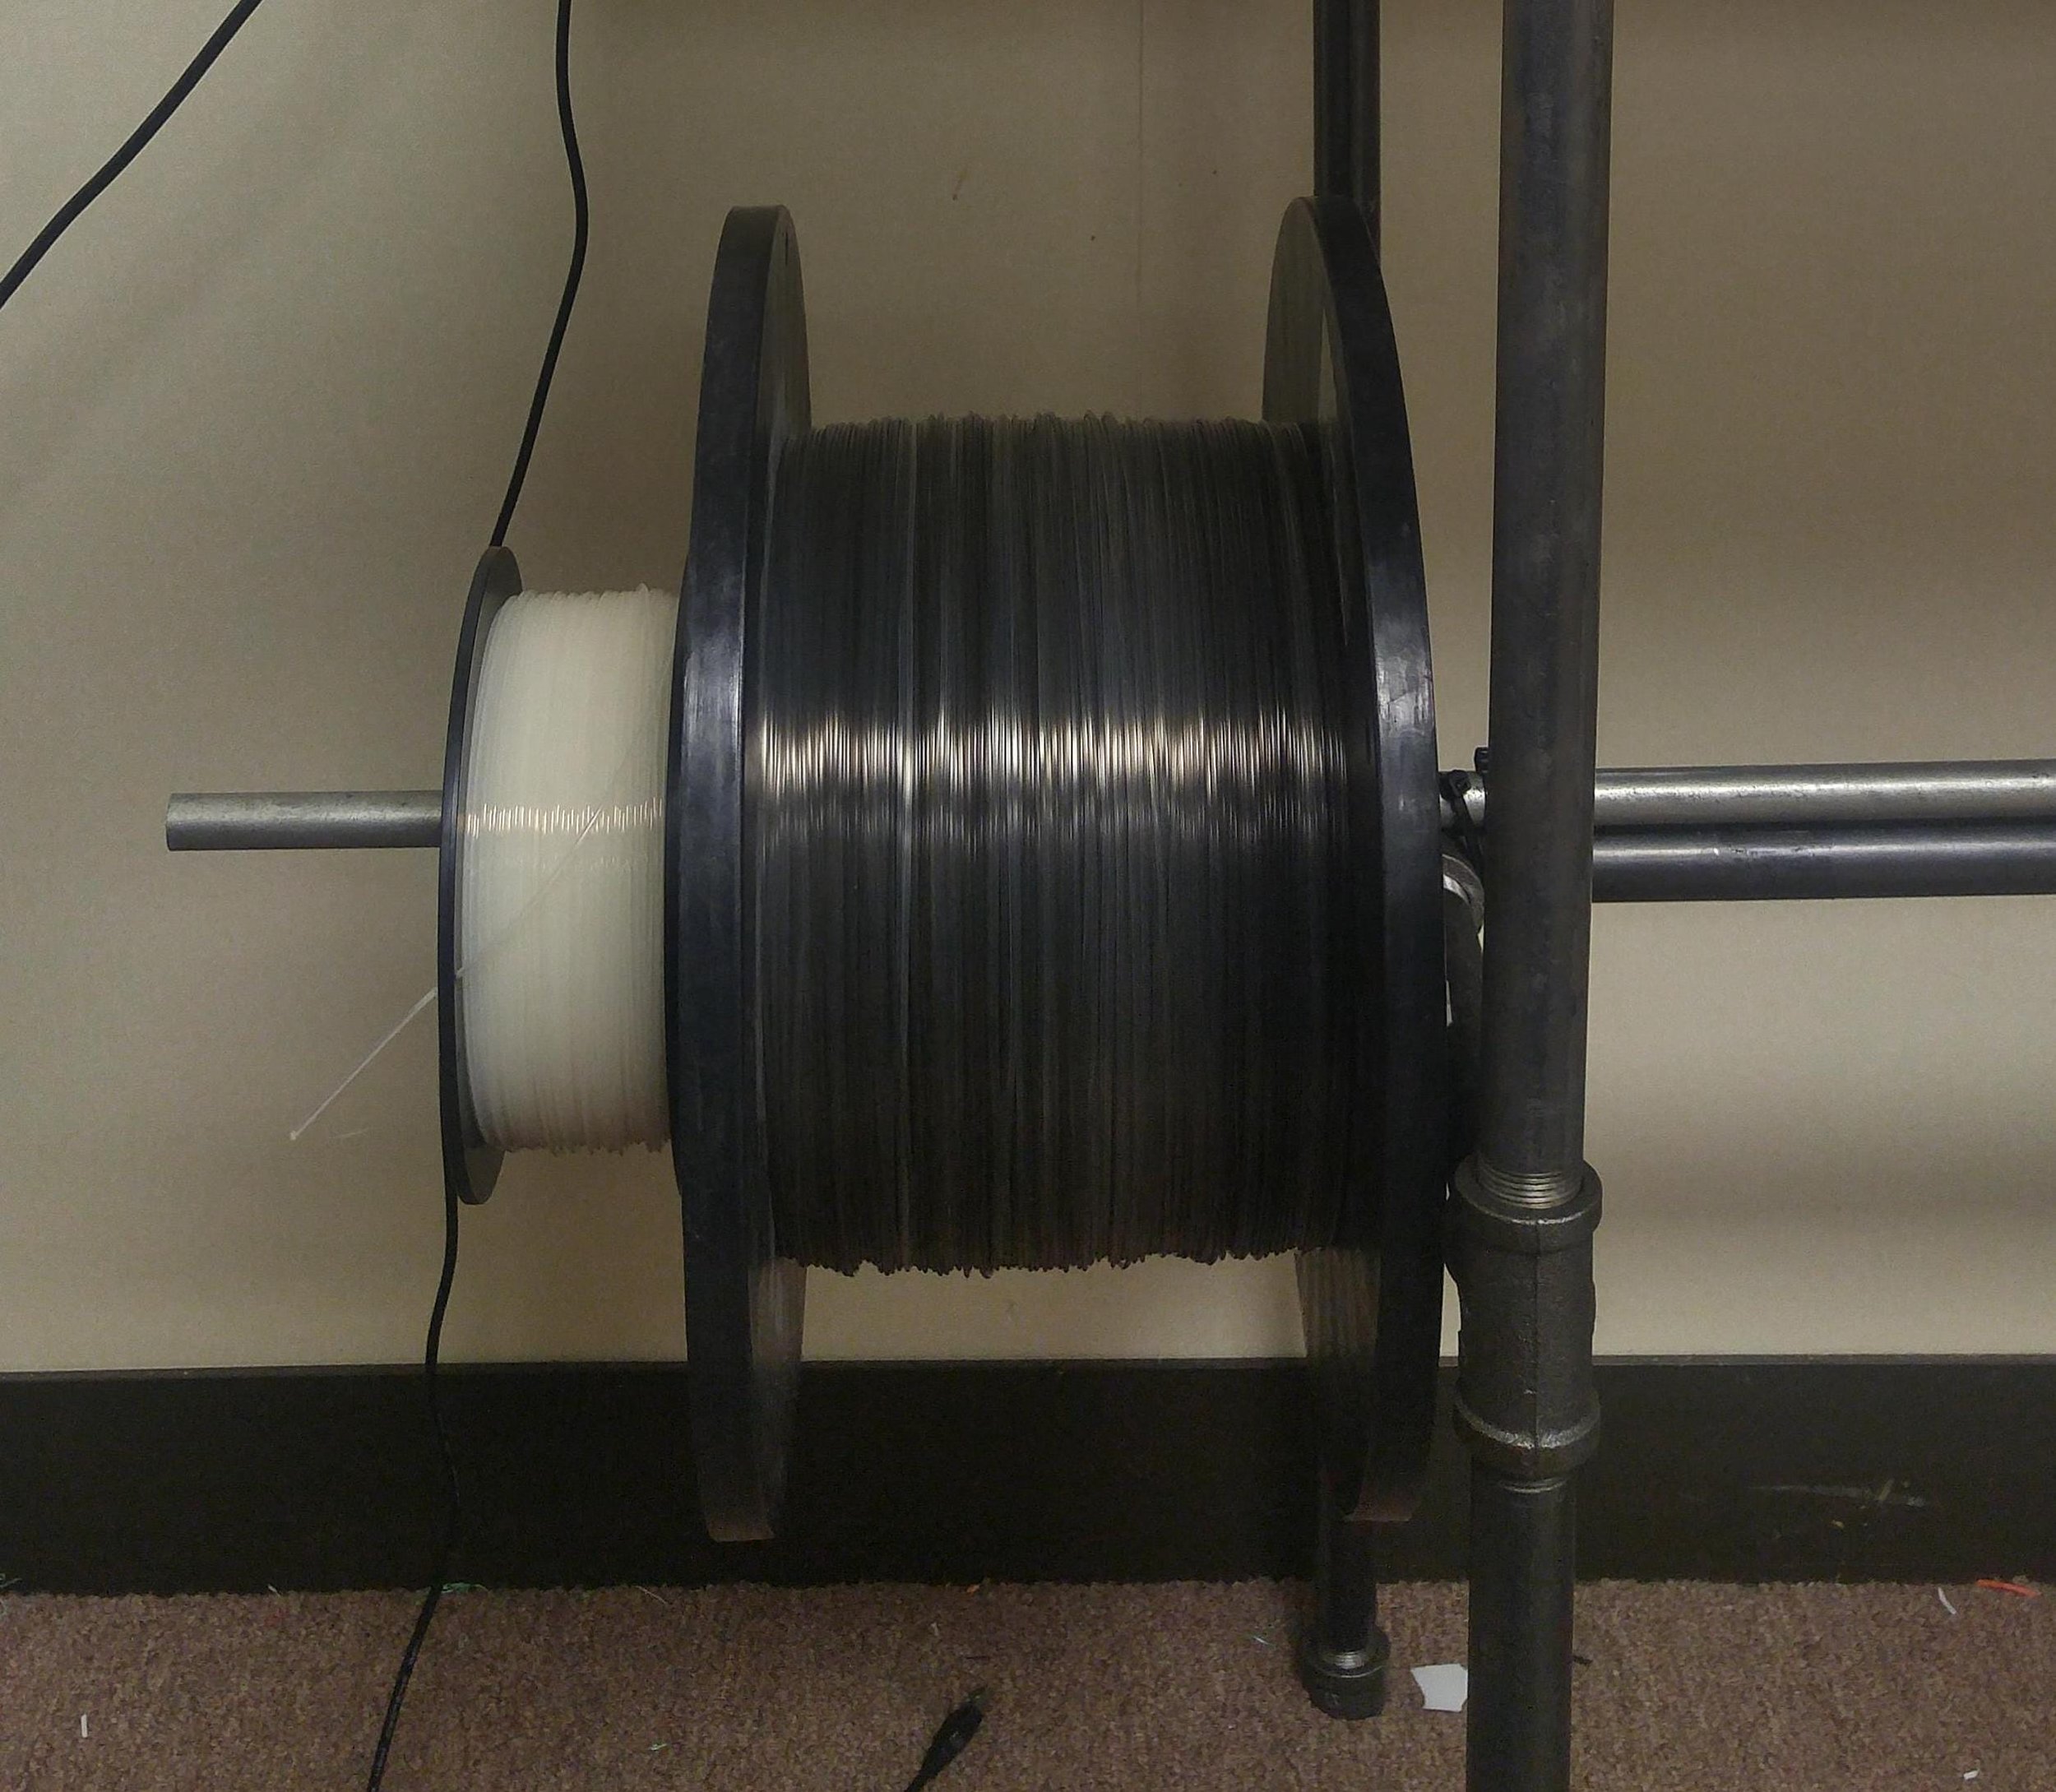  A gigantic 5mm diameter 3D printer filament beside a standard 1kg spool 